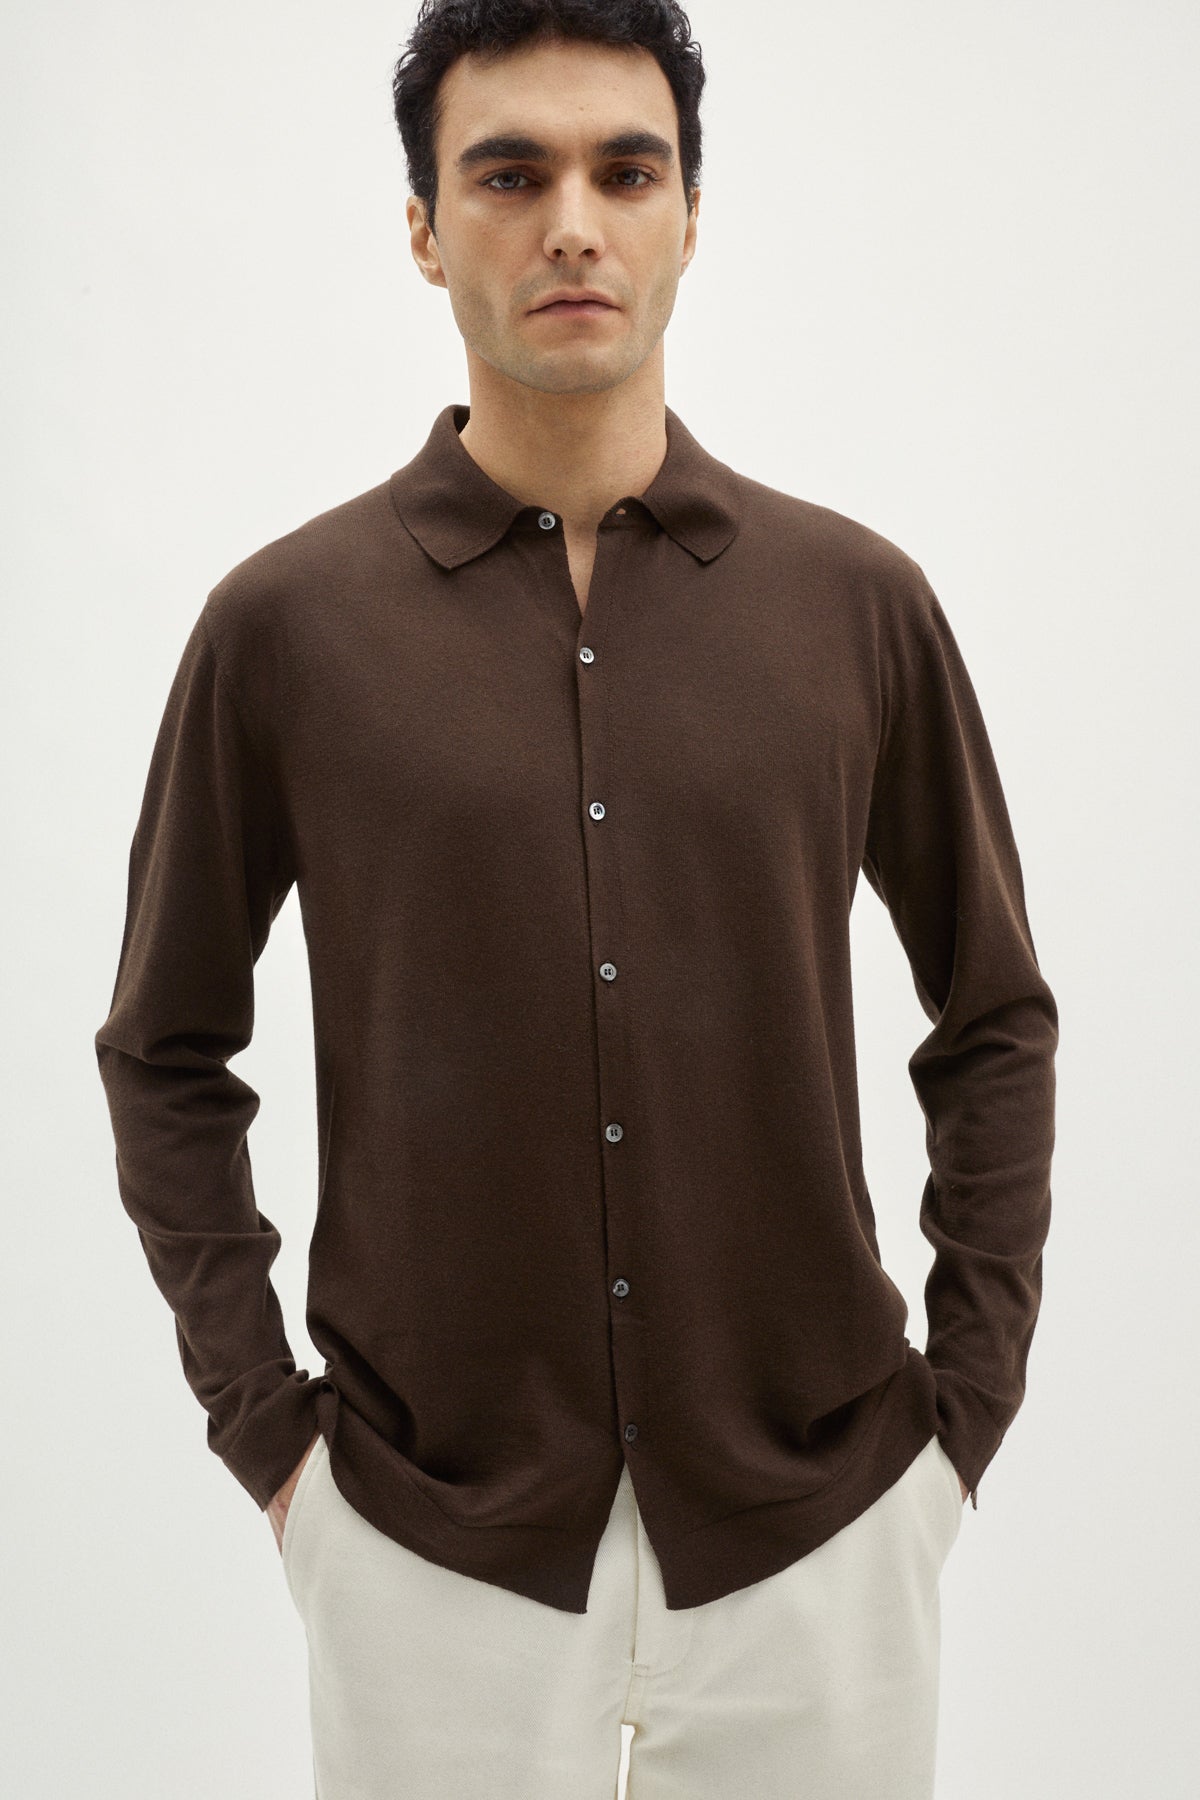 the organic cotton knit shirt mocha brown